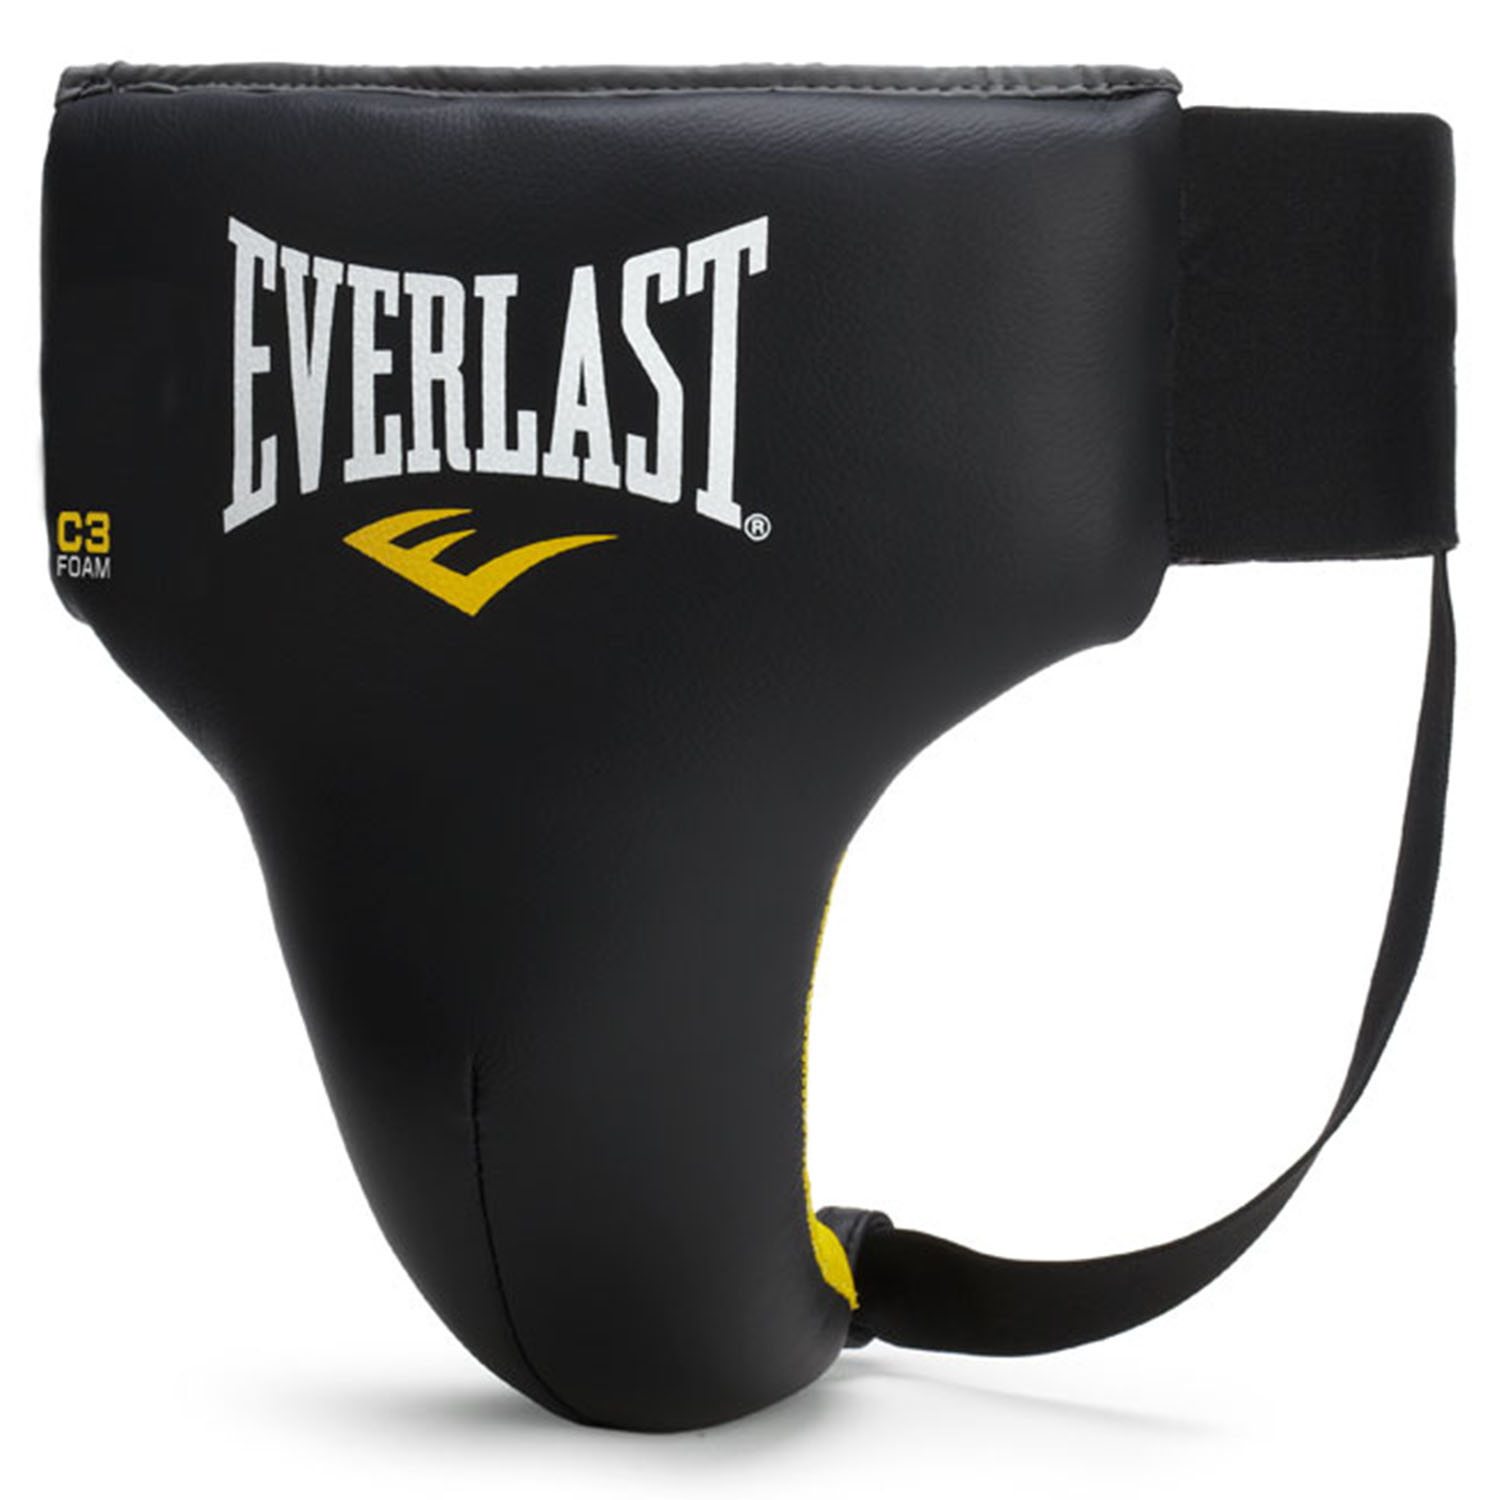 Everlast Groin Guard, C3 Pro, black, XL